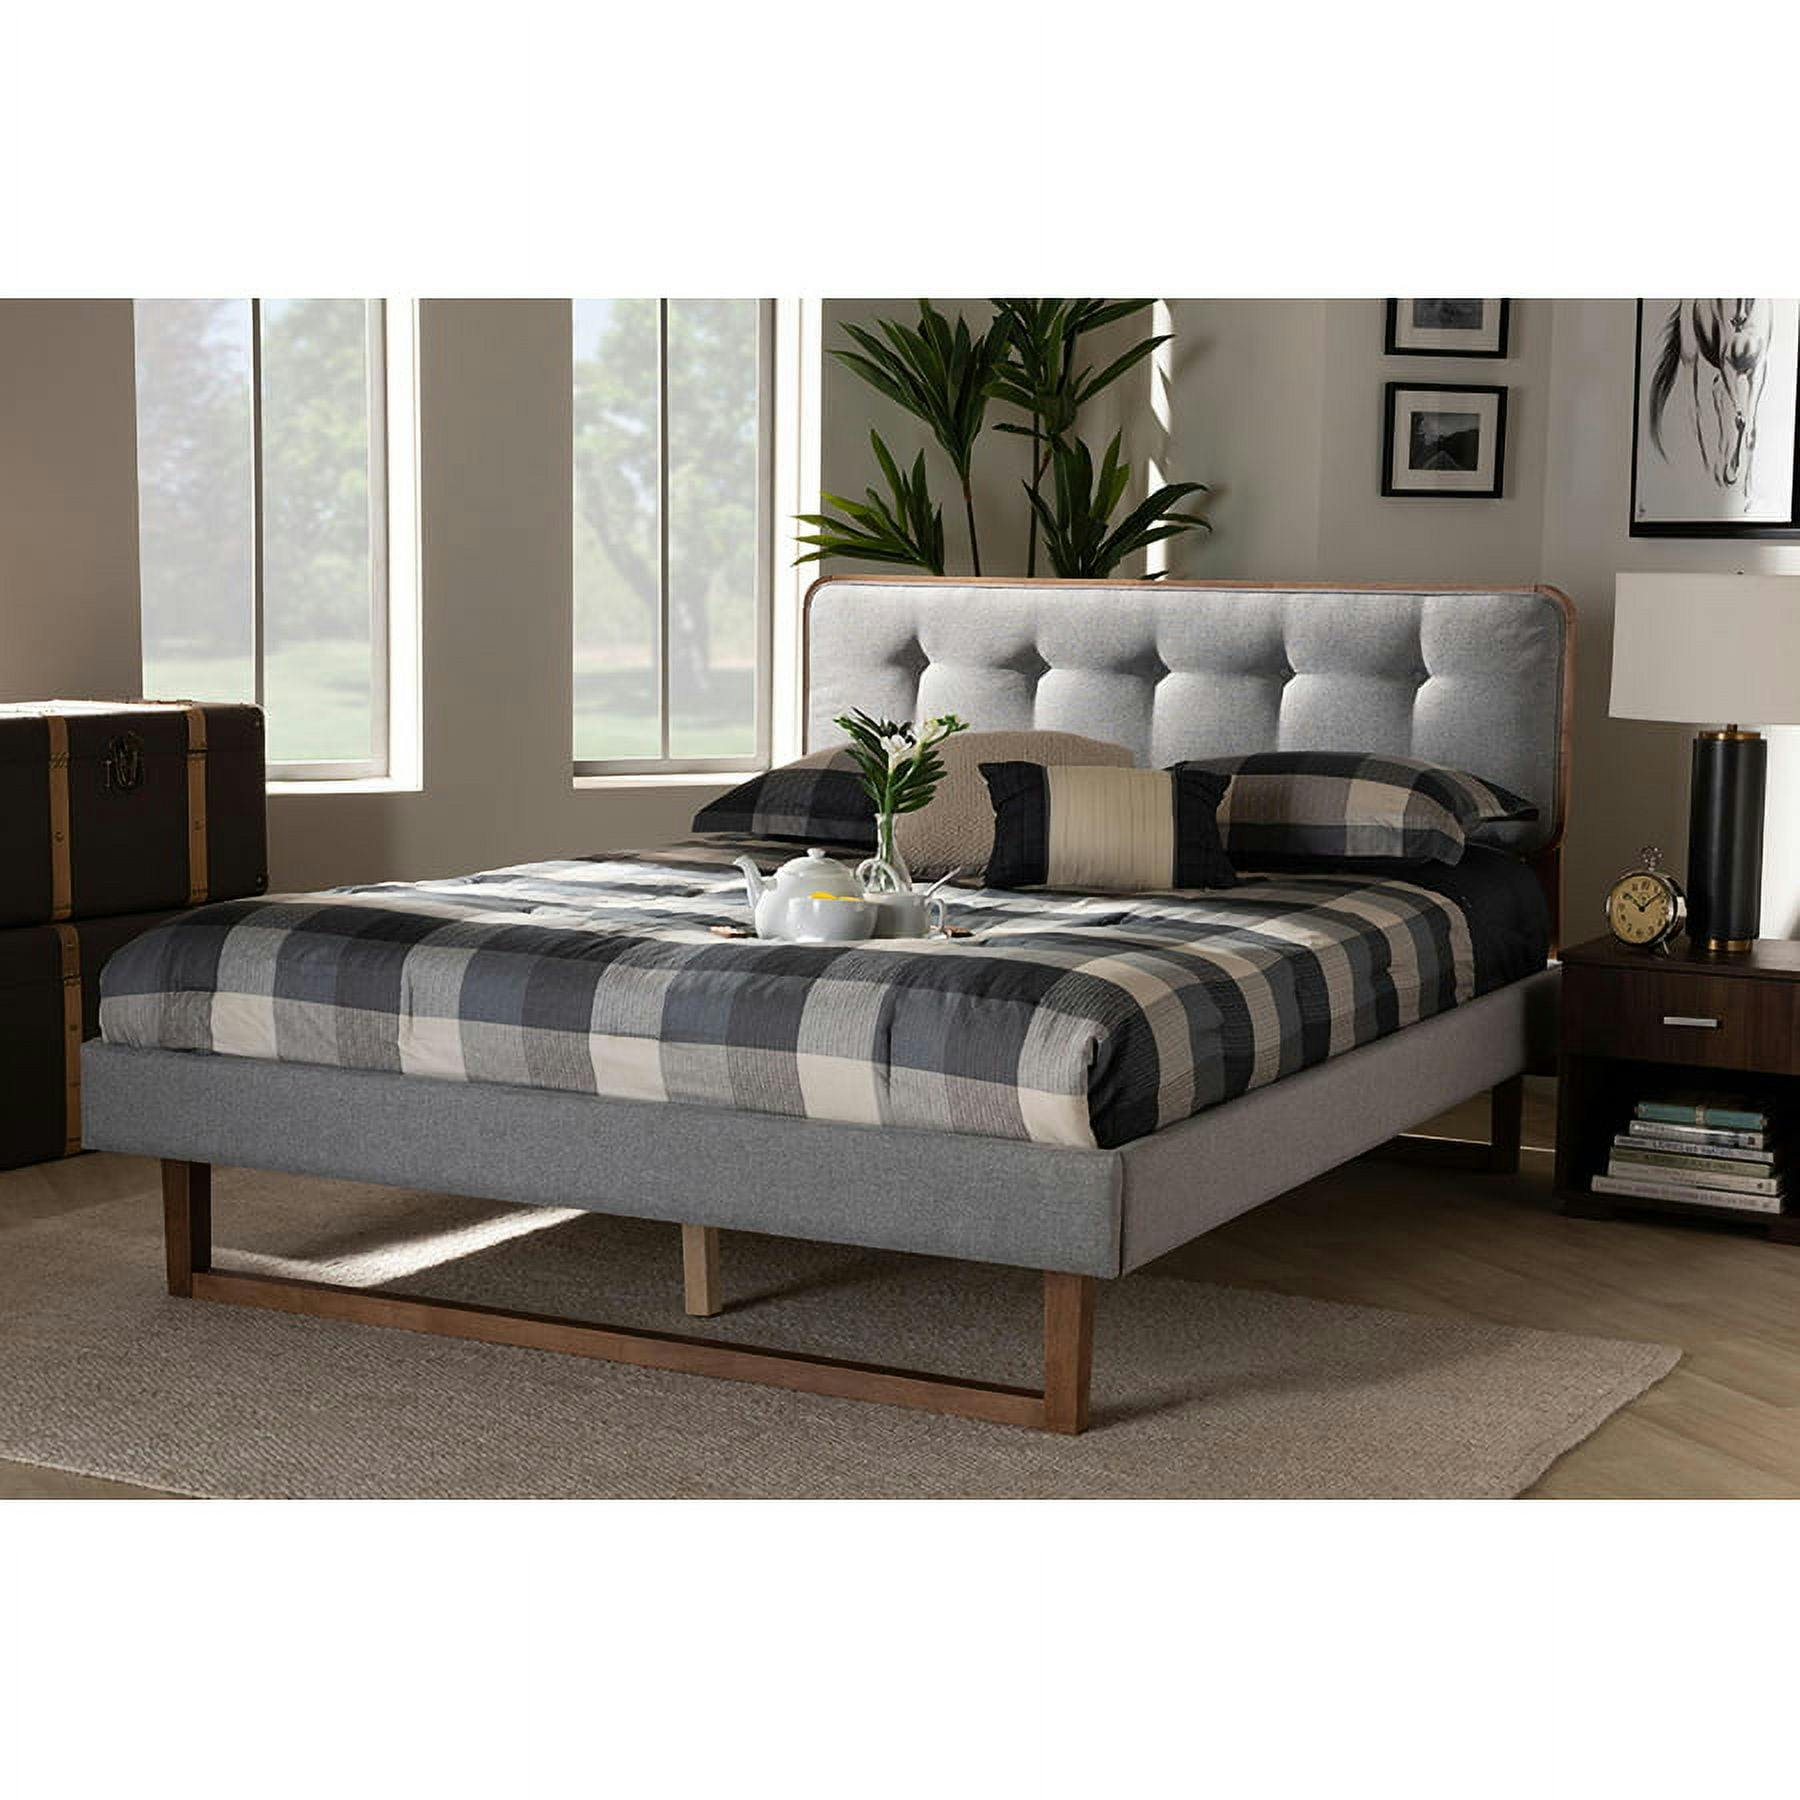 Ash Walnut and Light Grey Tufted Full Platform Bed with Slats